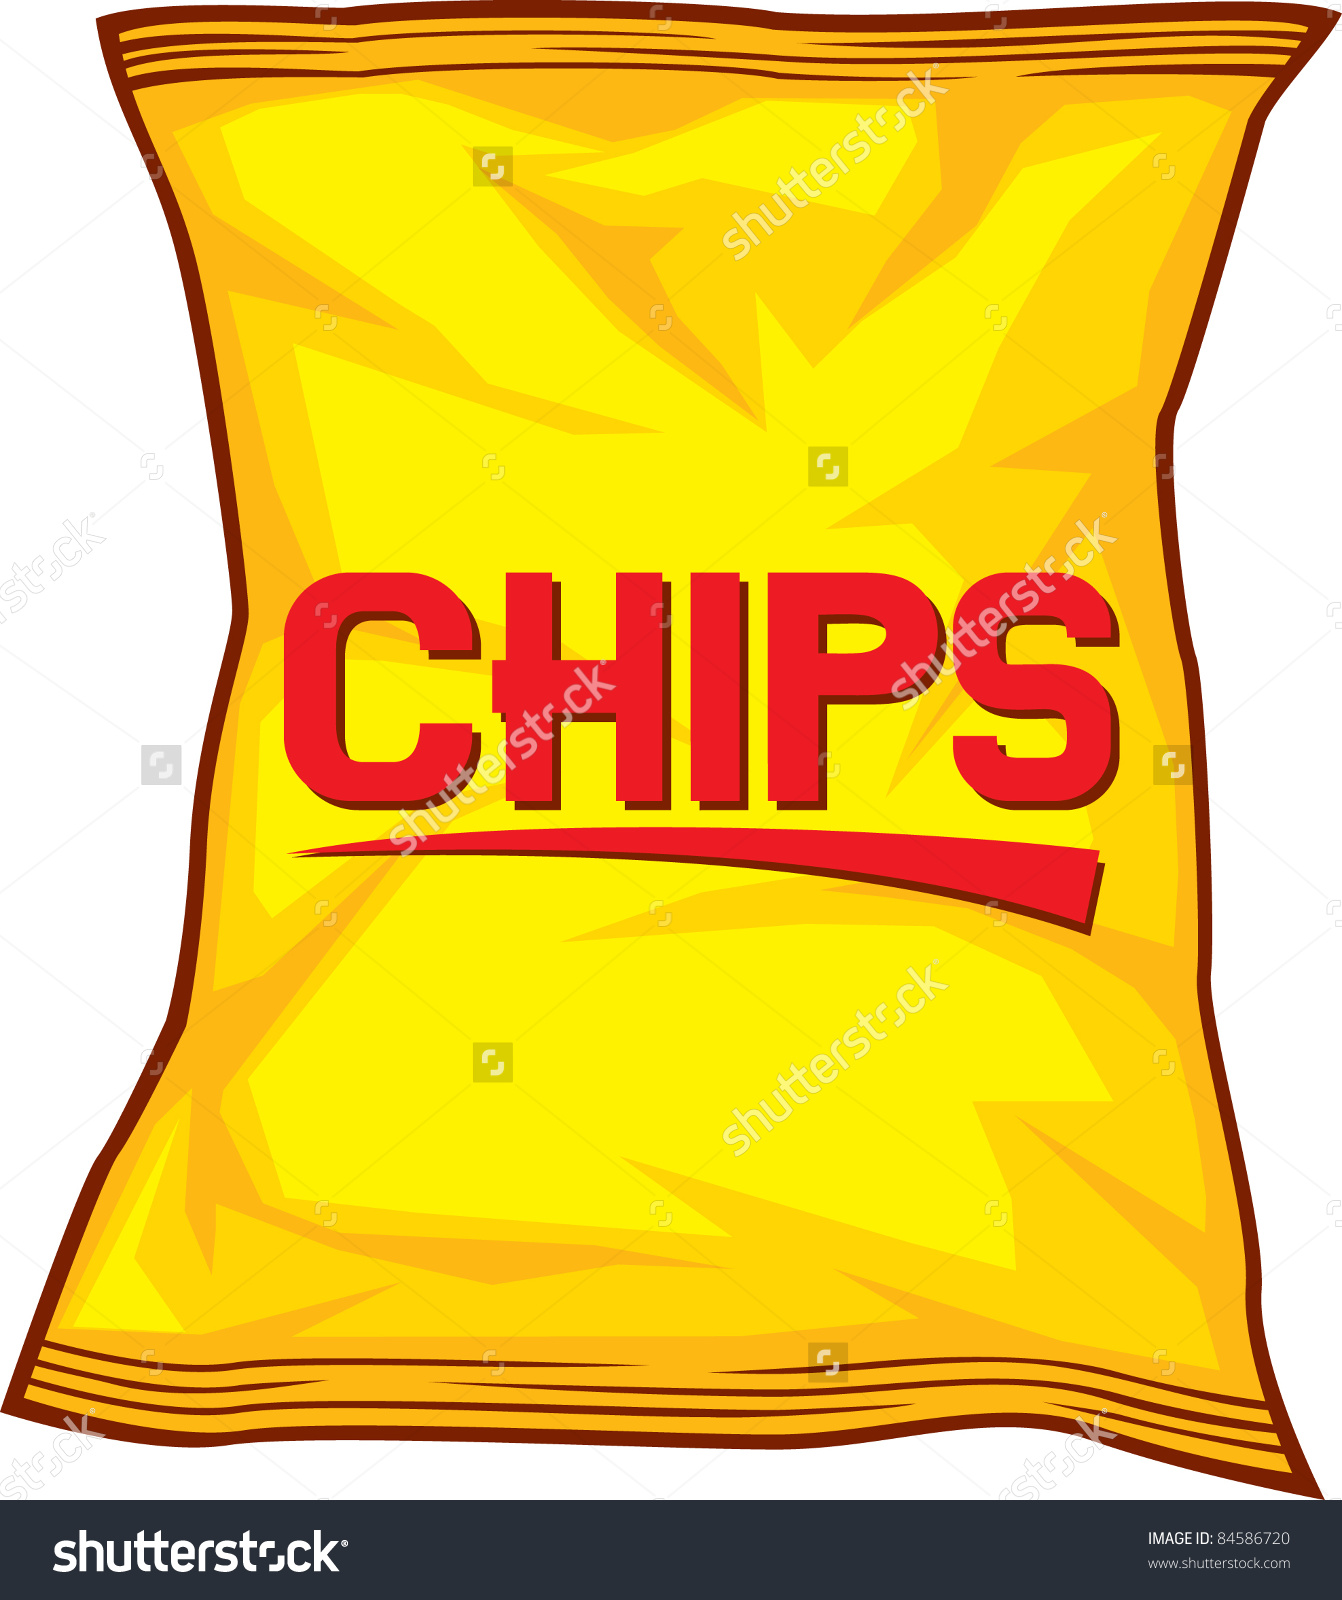 Bag chips clipart.